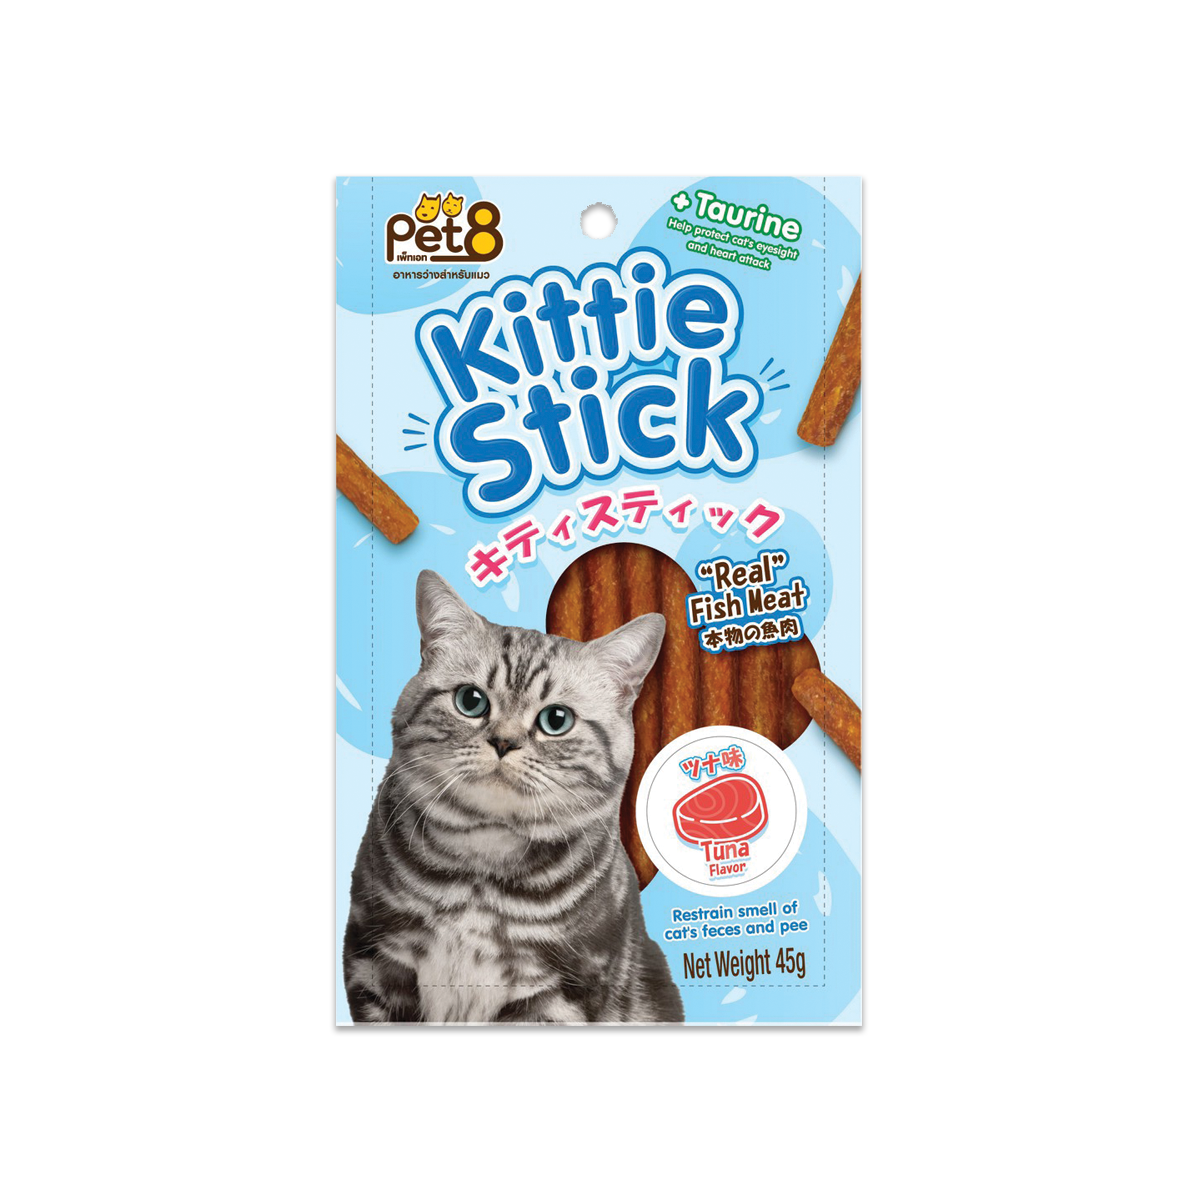 Pet8 JPT03 Kittie Stick Cat Treat Tuna Flavour เพ็ทเอ็ท คิตตี้ สติ้ก ขนมแมว แบบแท่ง ผสมวิตามินทอรีน รสทูน่า ขนาด 45 กรัม